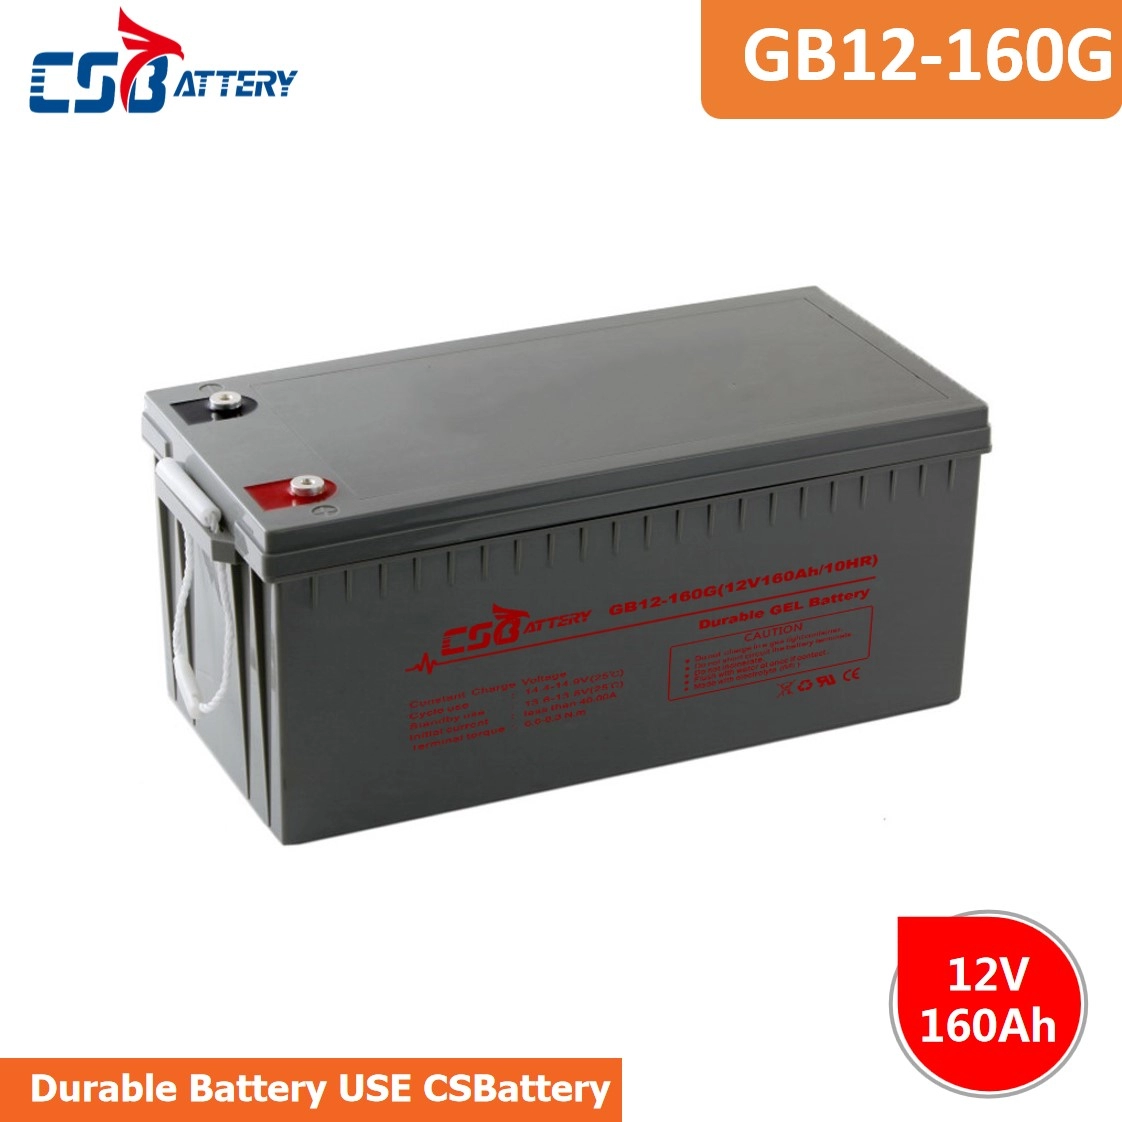 GB12-160G 12V 160Ah Durable Long Life Gel Battery